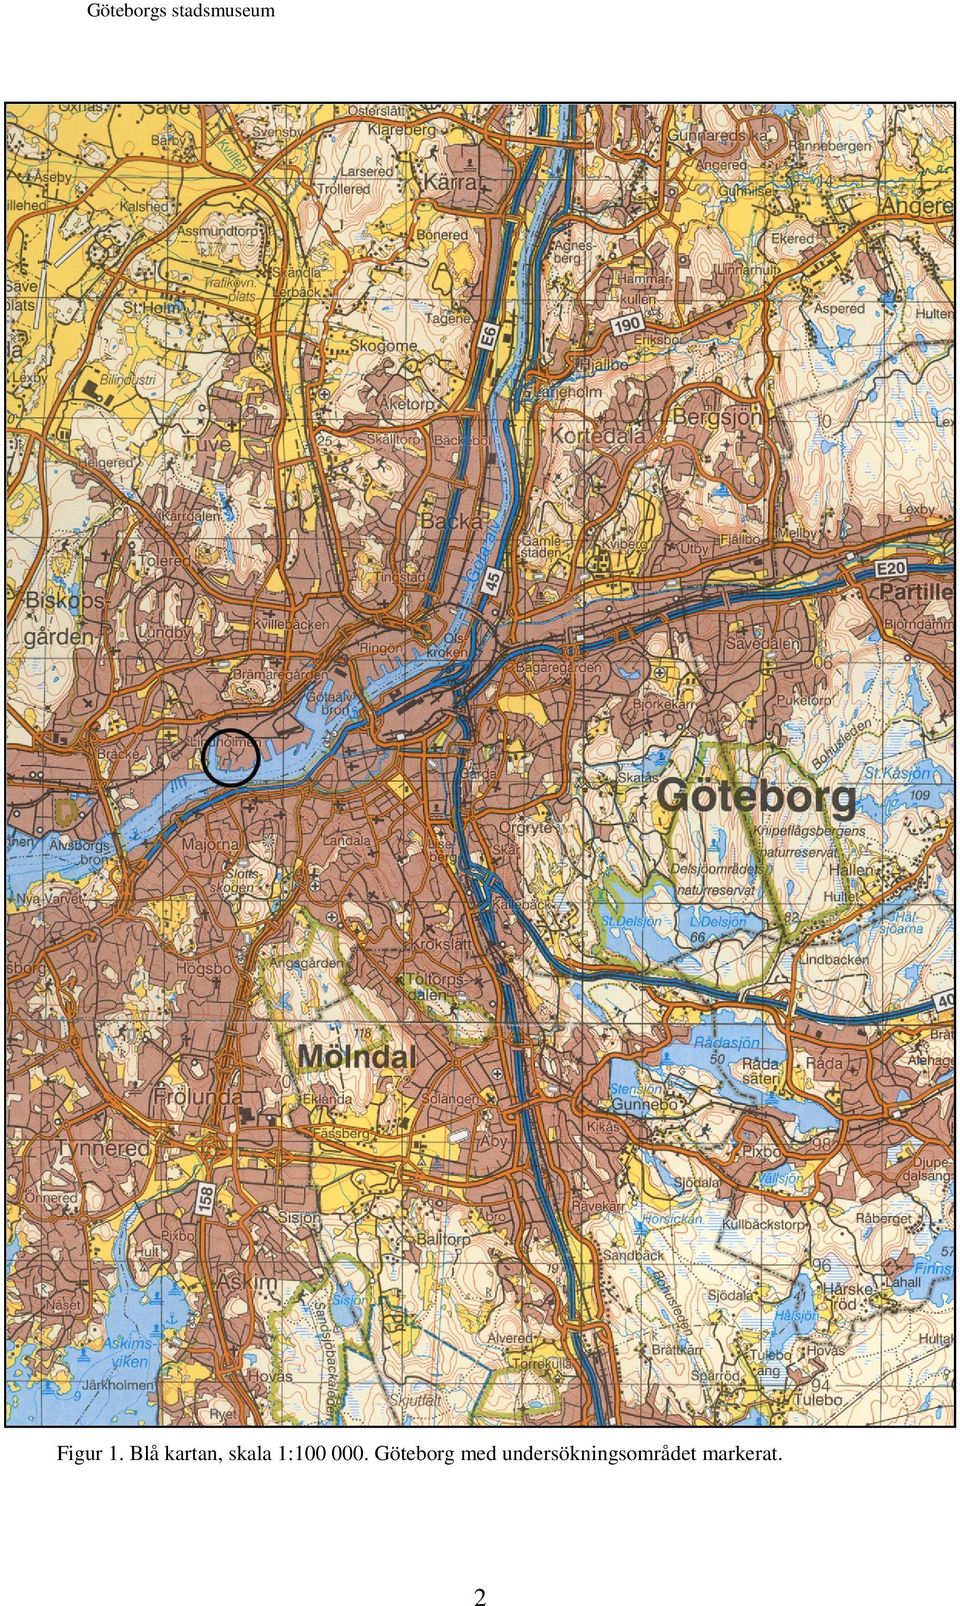 Blå kartan, skala 1:100